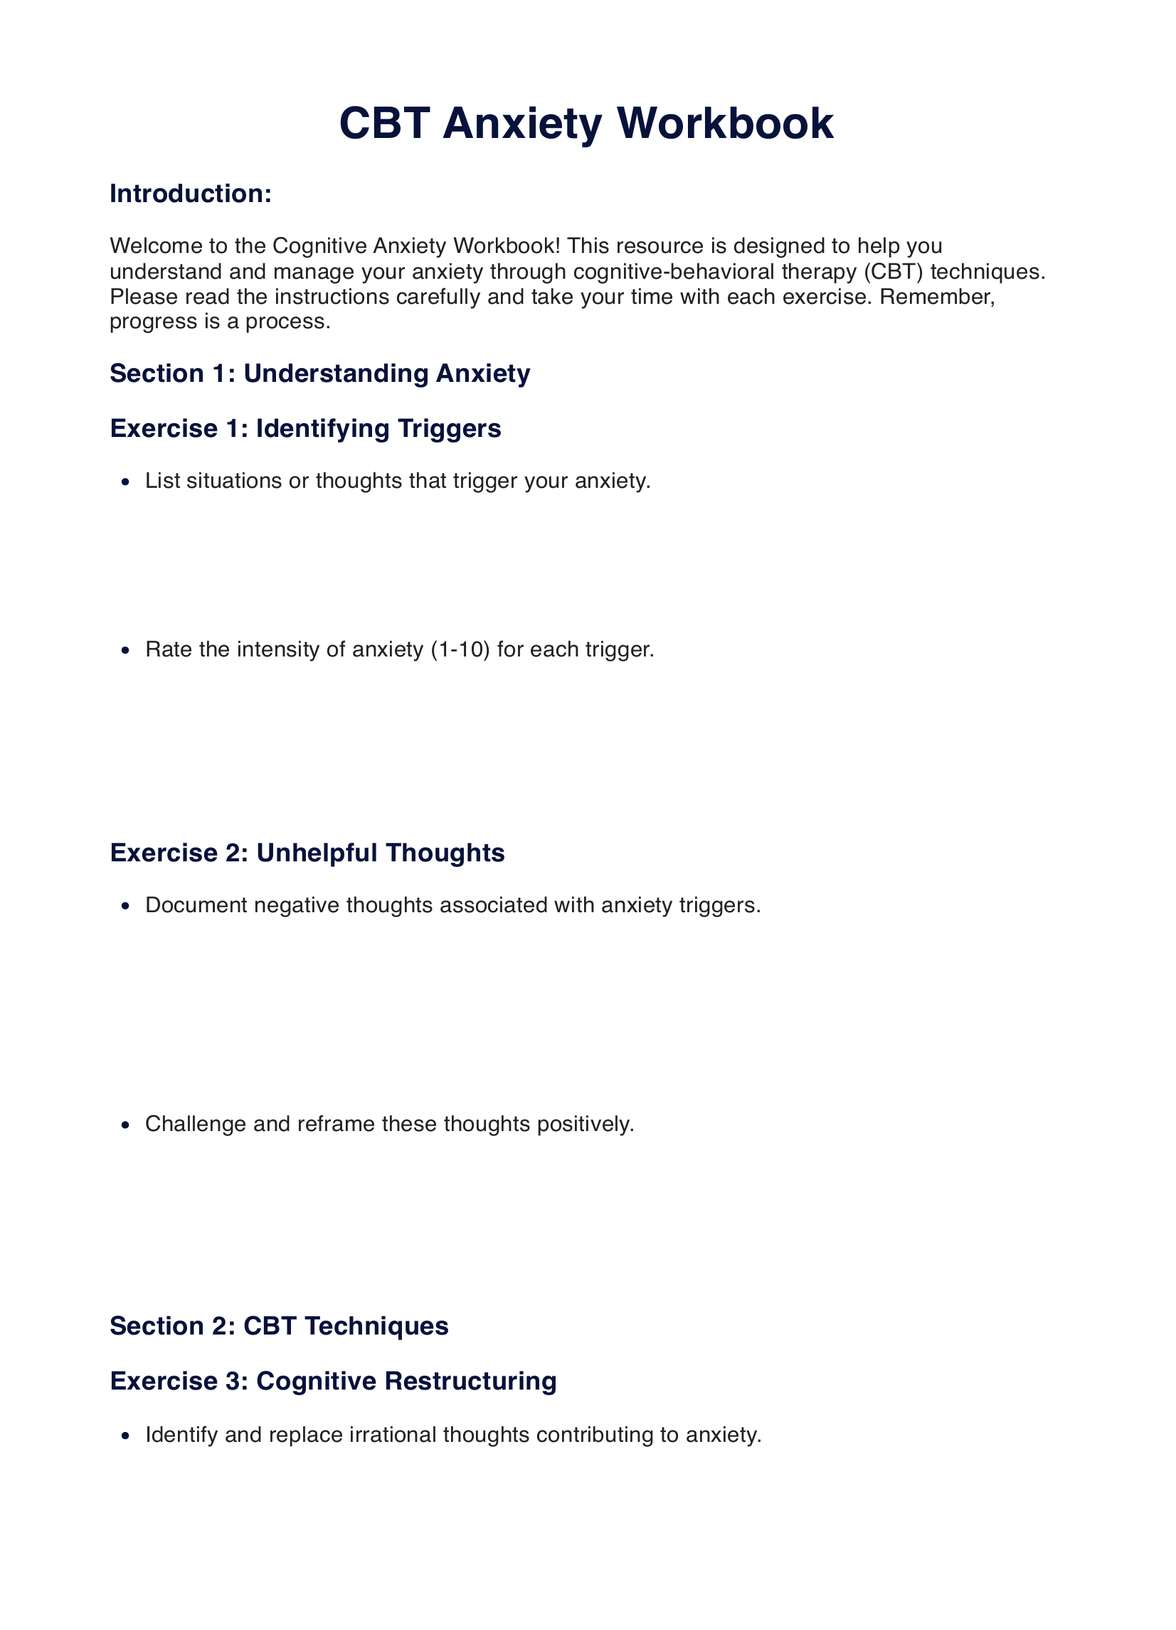 CBT Anxiety Workbook PDF Example